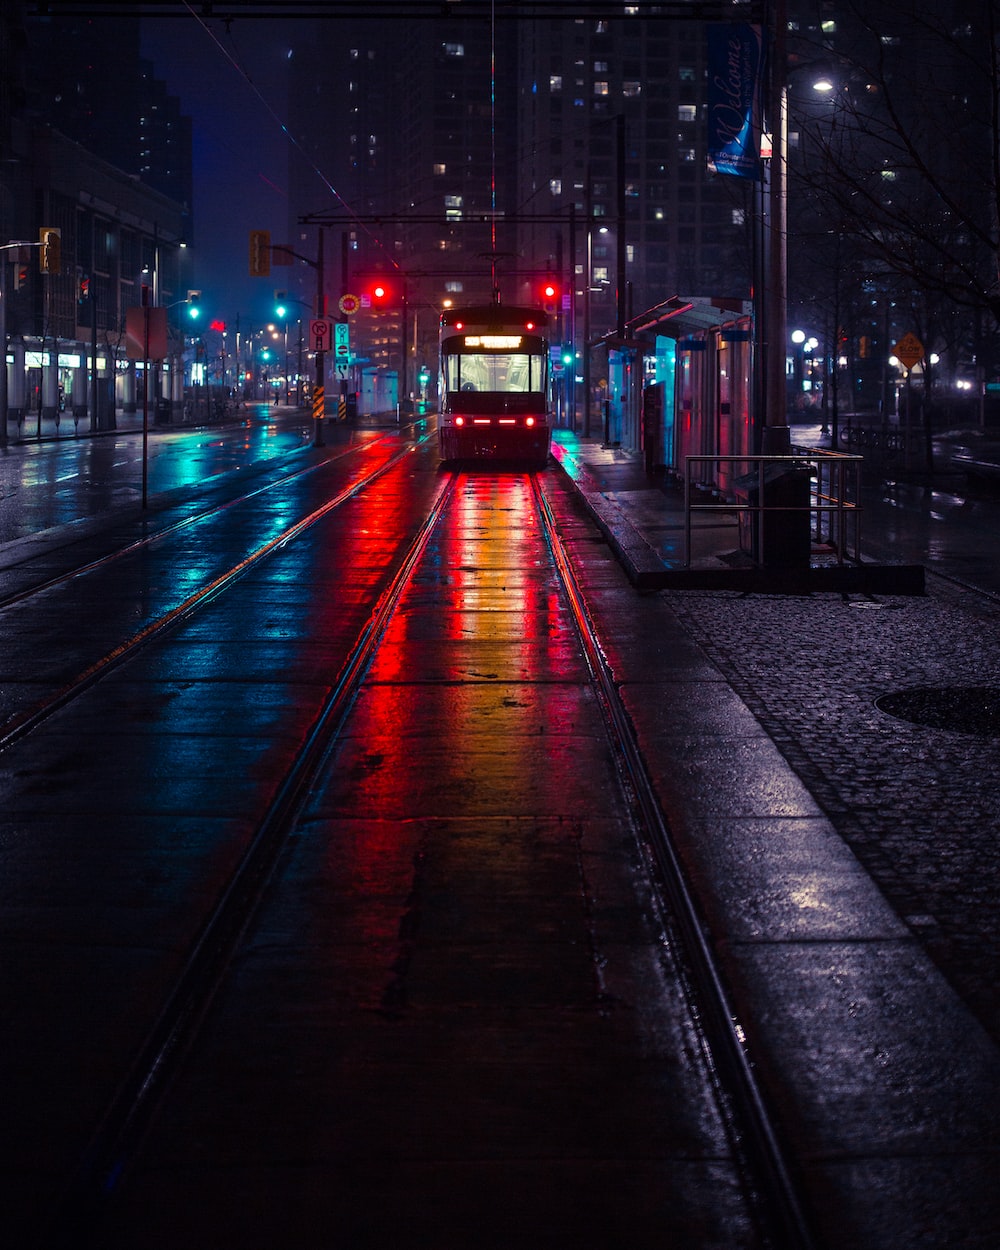 Toronto Night Picture. Download Free Image